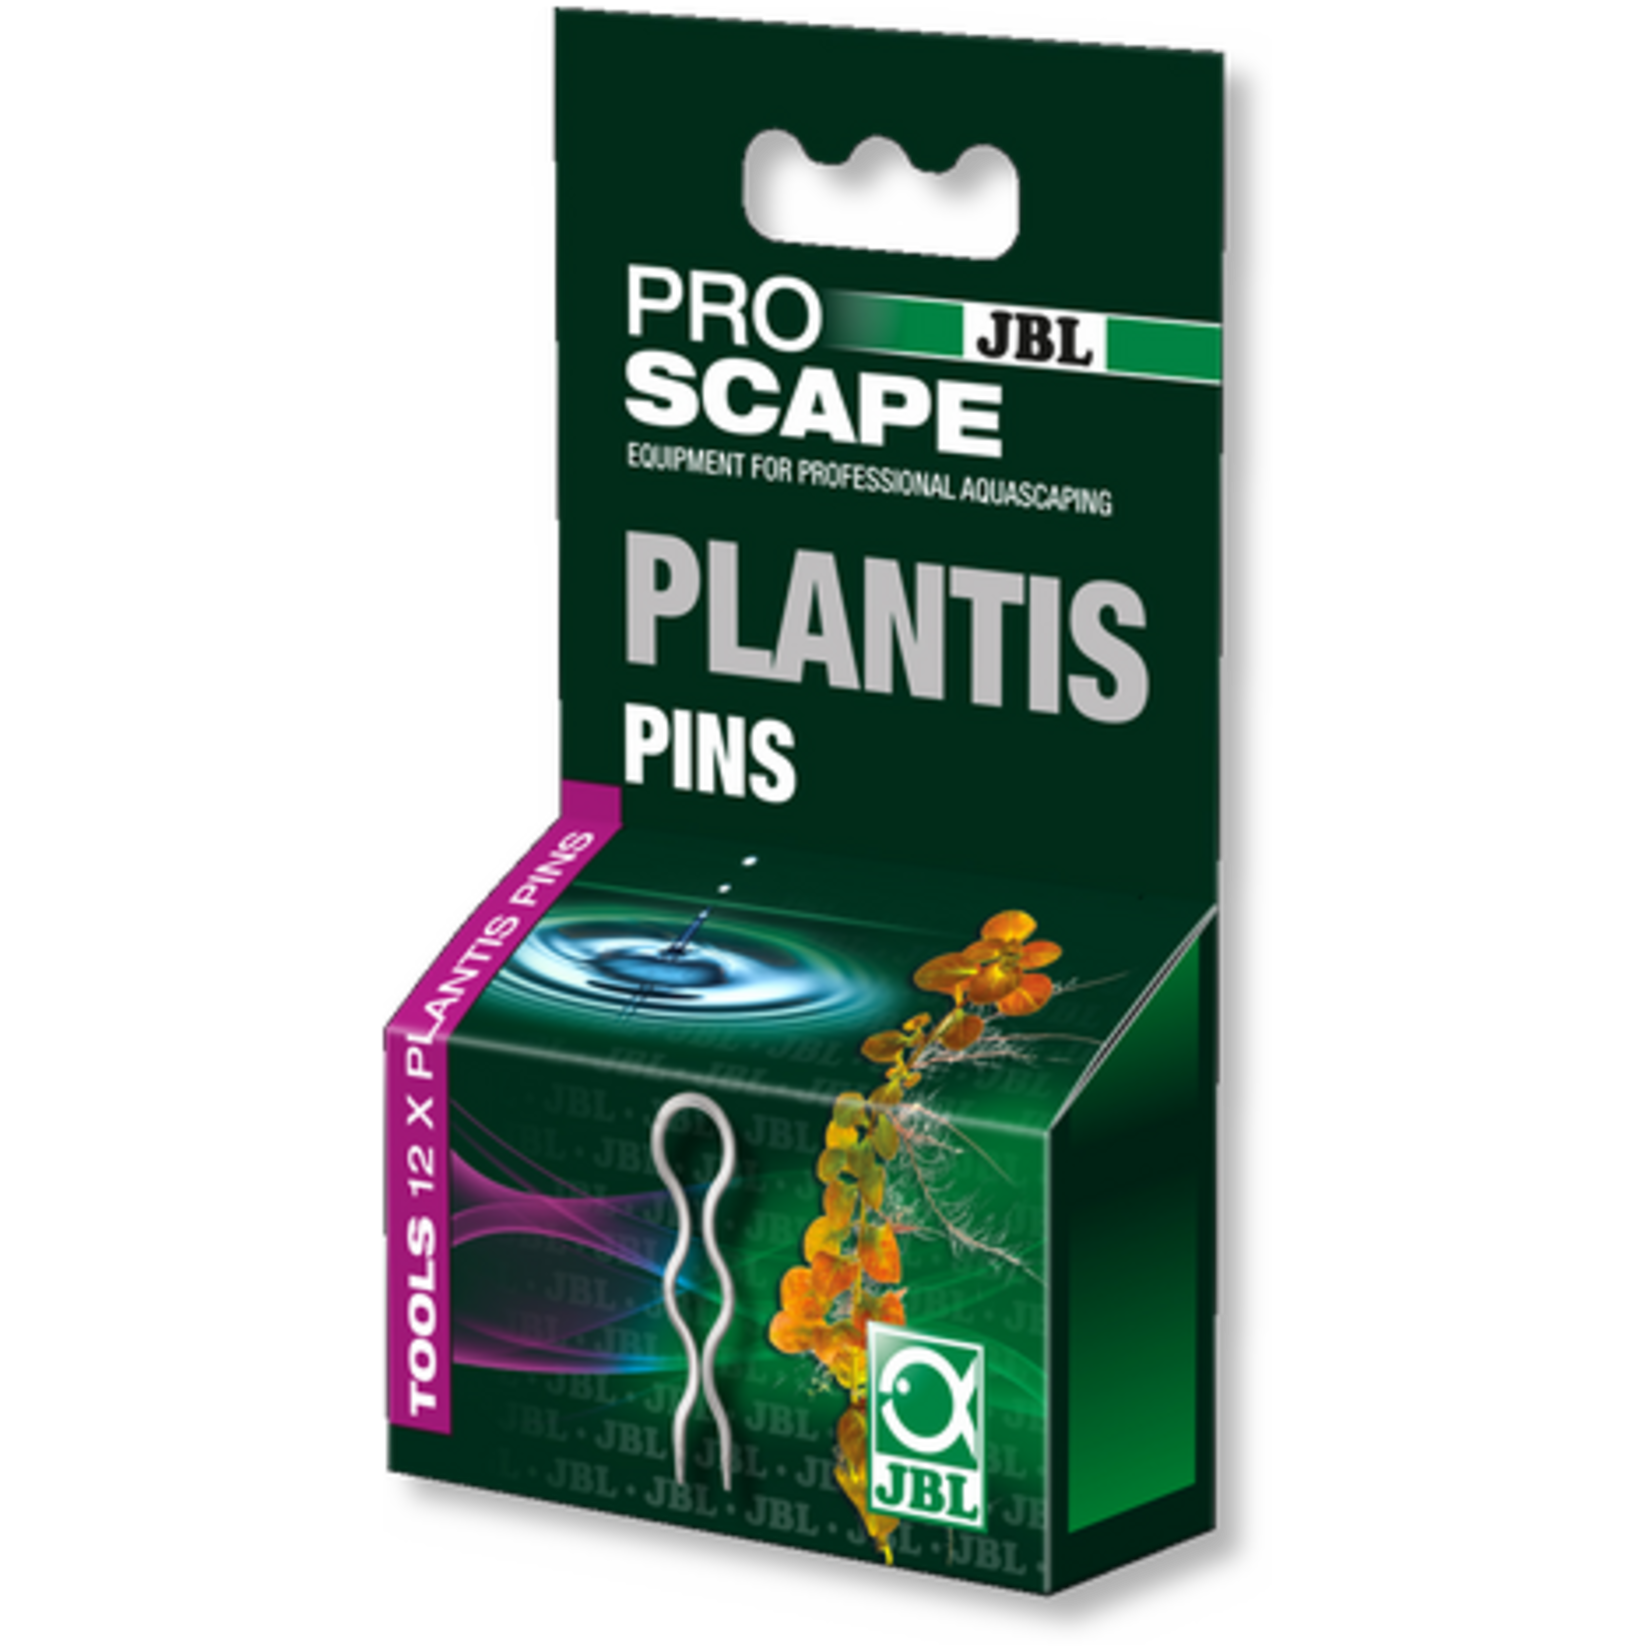 JBL Proscape plantis pins